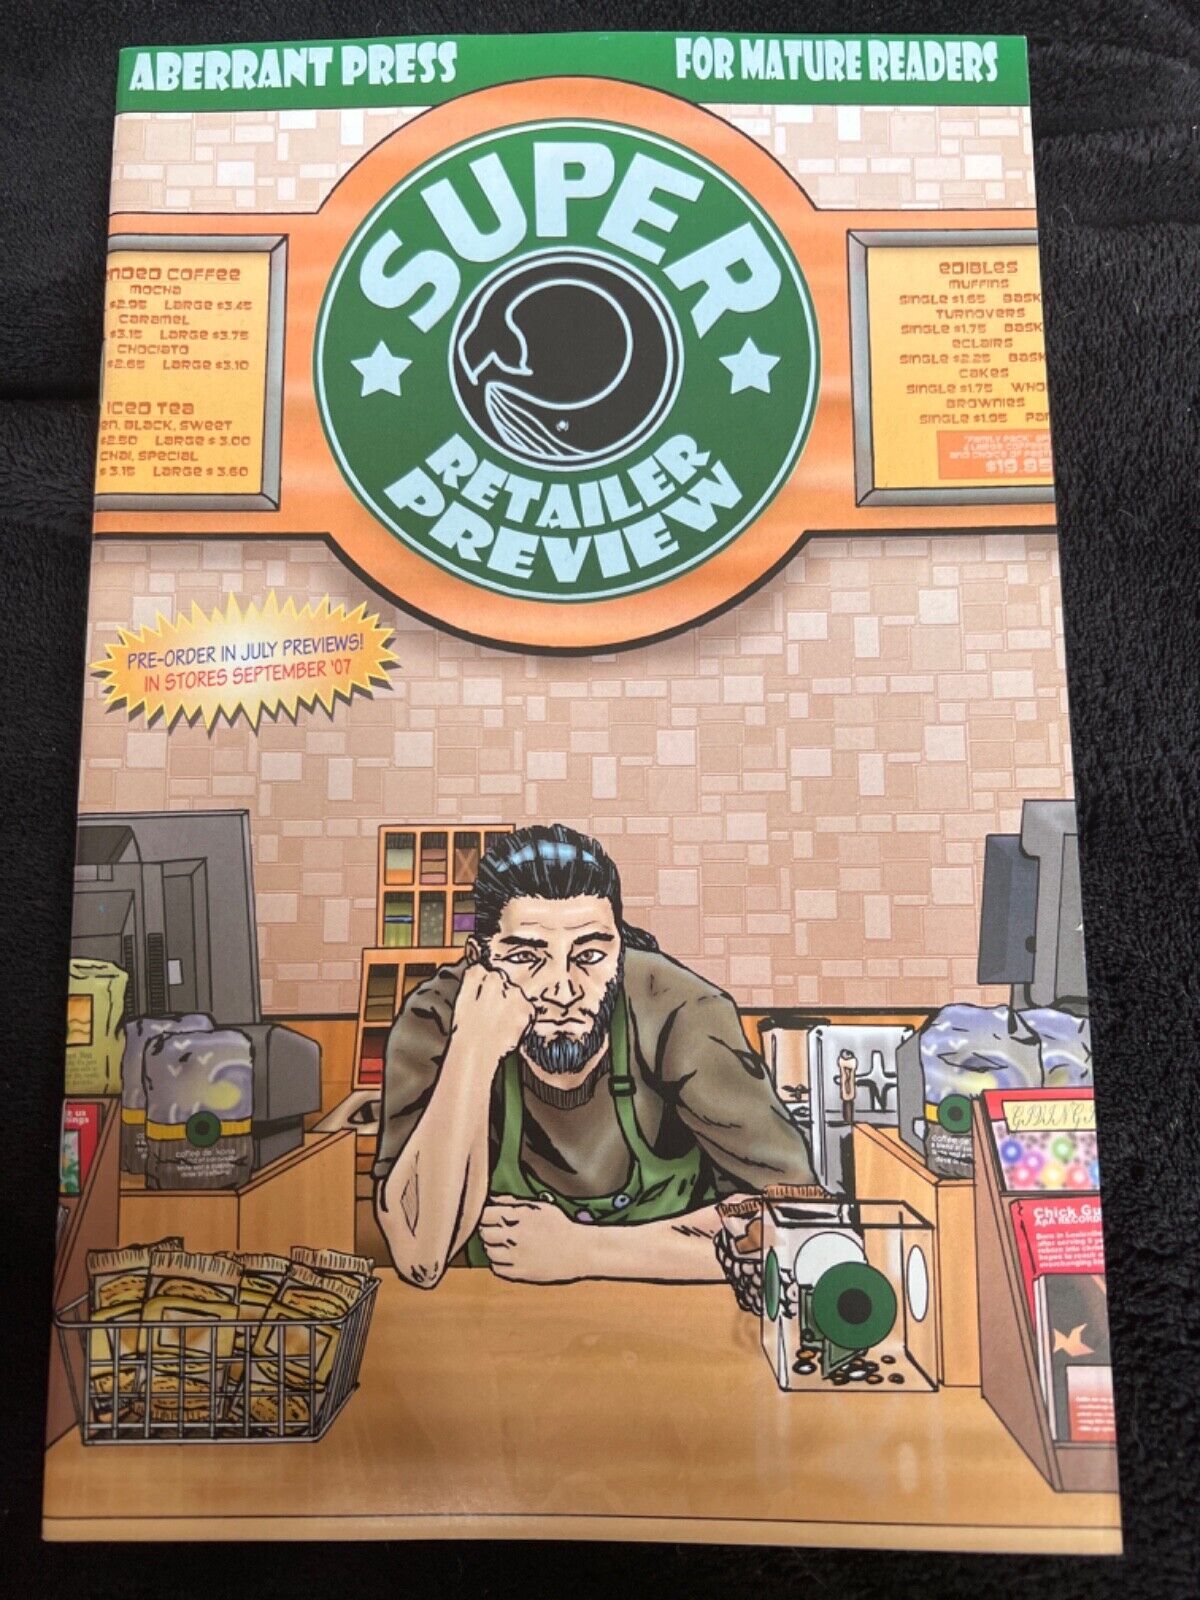 Cb6~comic book - Super Retailer Preview - issue 1 - 2007